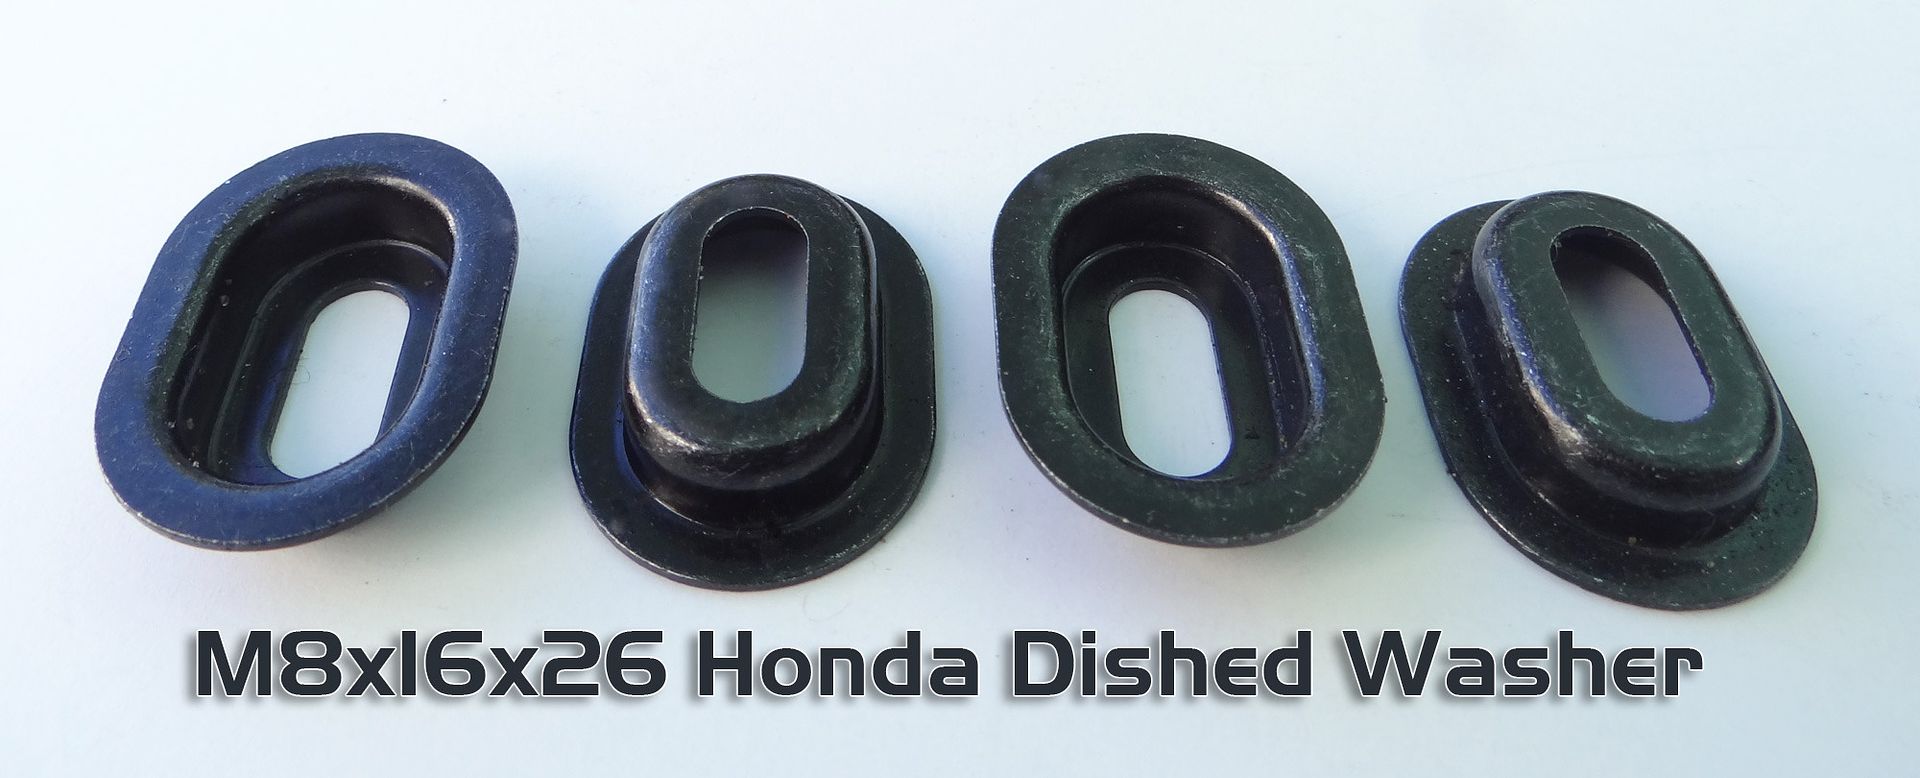 SPECBOLT HONDA DISHED CHAIN SLIDER WASHERS photo M8x16x26-Honda-Dished-Washer_zpsiu9qp9nz.jpg